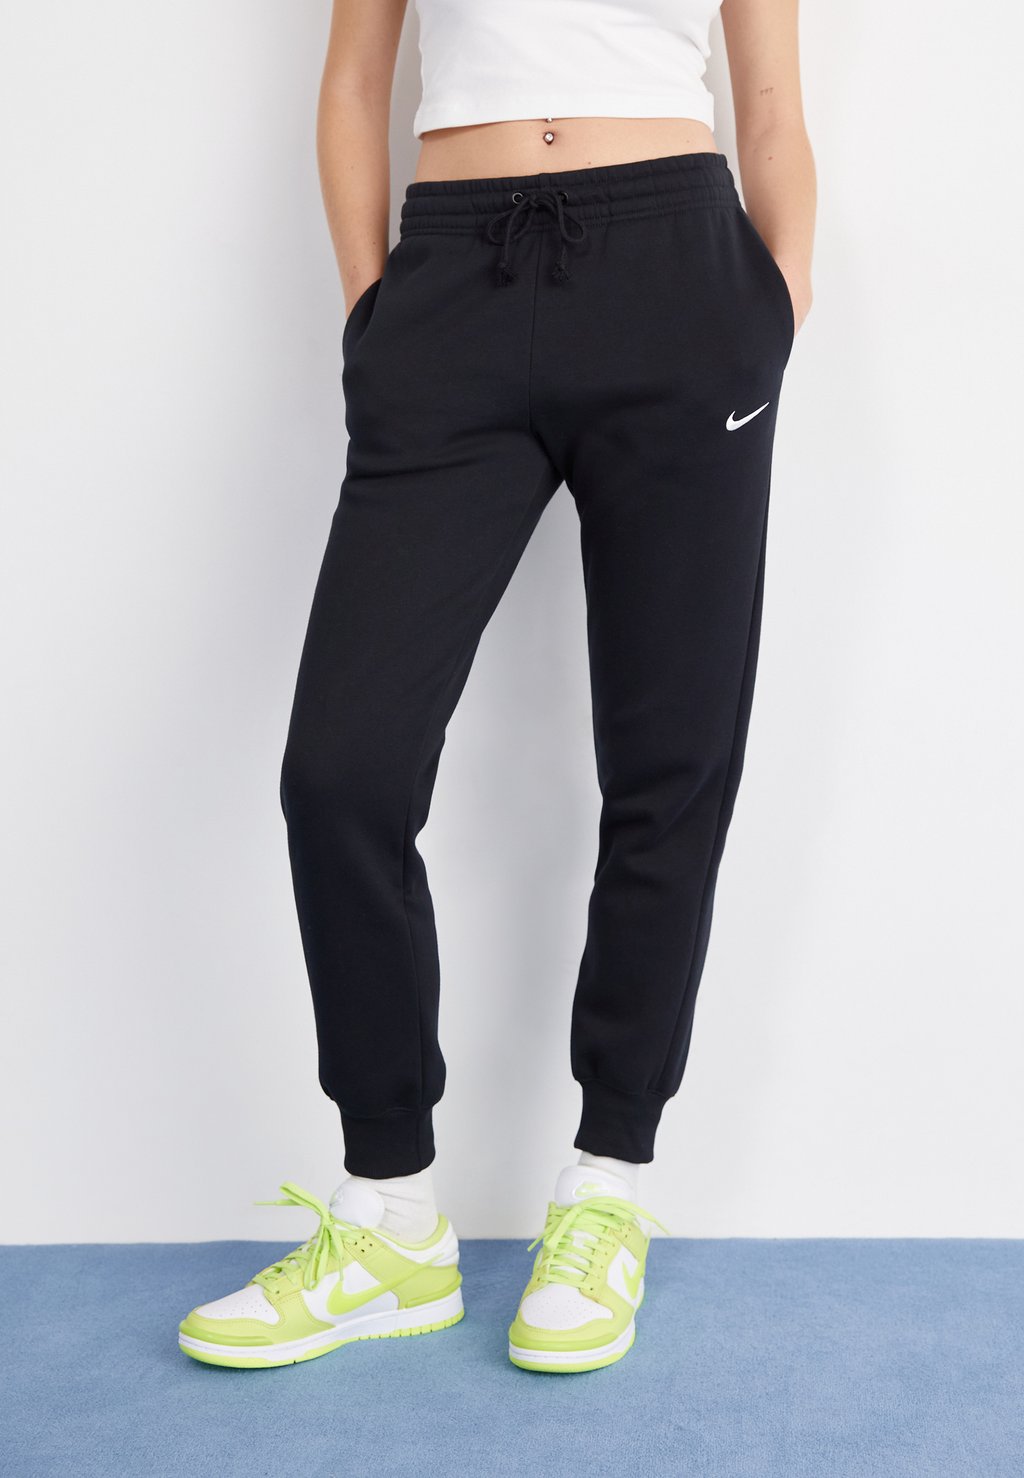 Спортивные брюки Phoenix Pant Nike, черный спортивные брюки pant taper nike черный белый